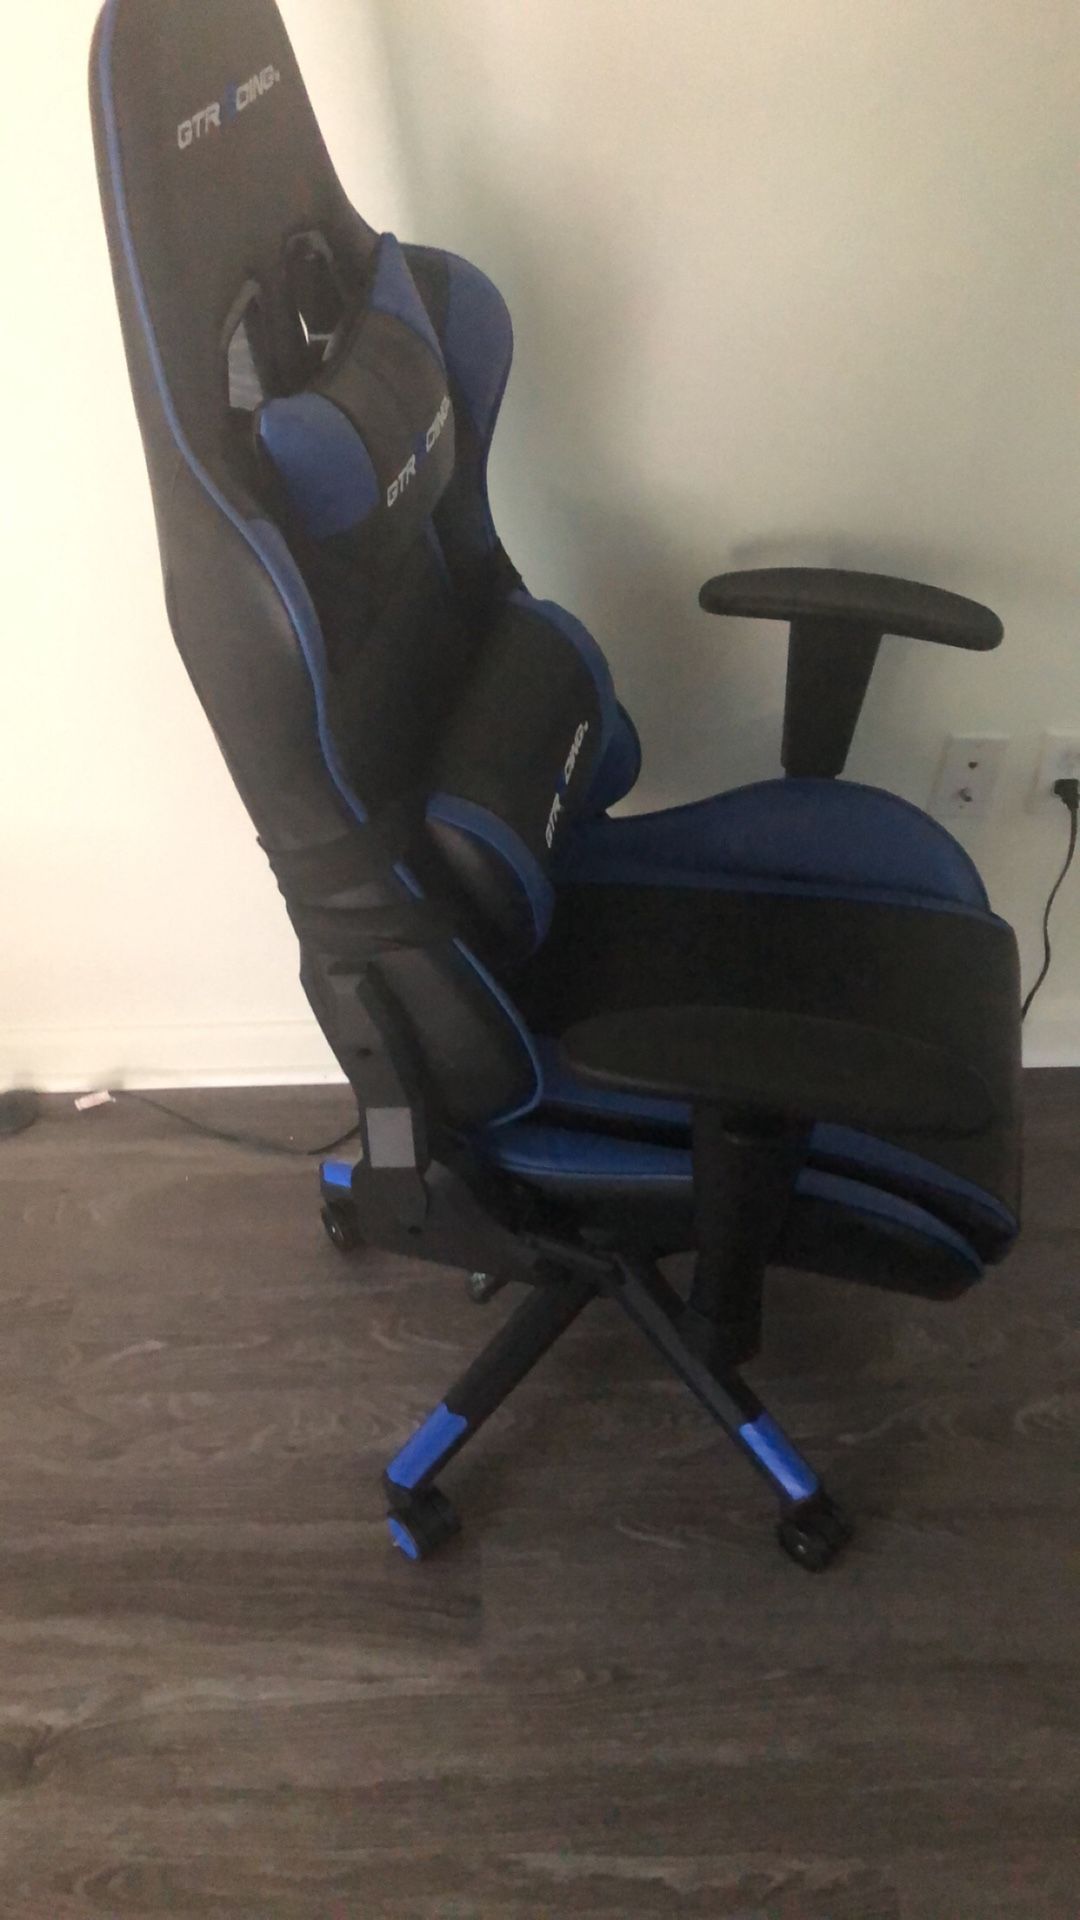 GTR Gaming chair